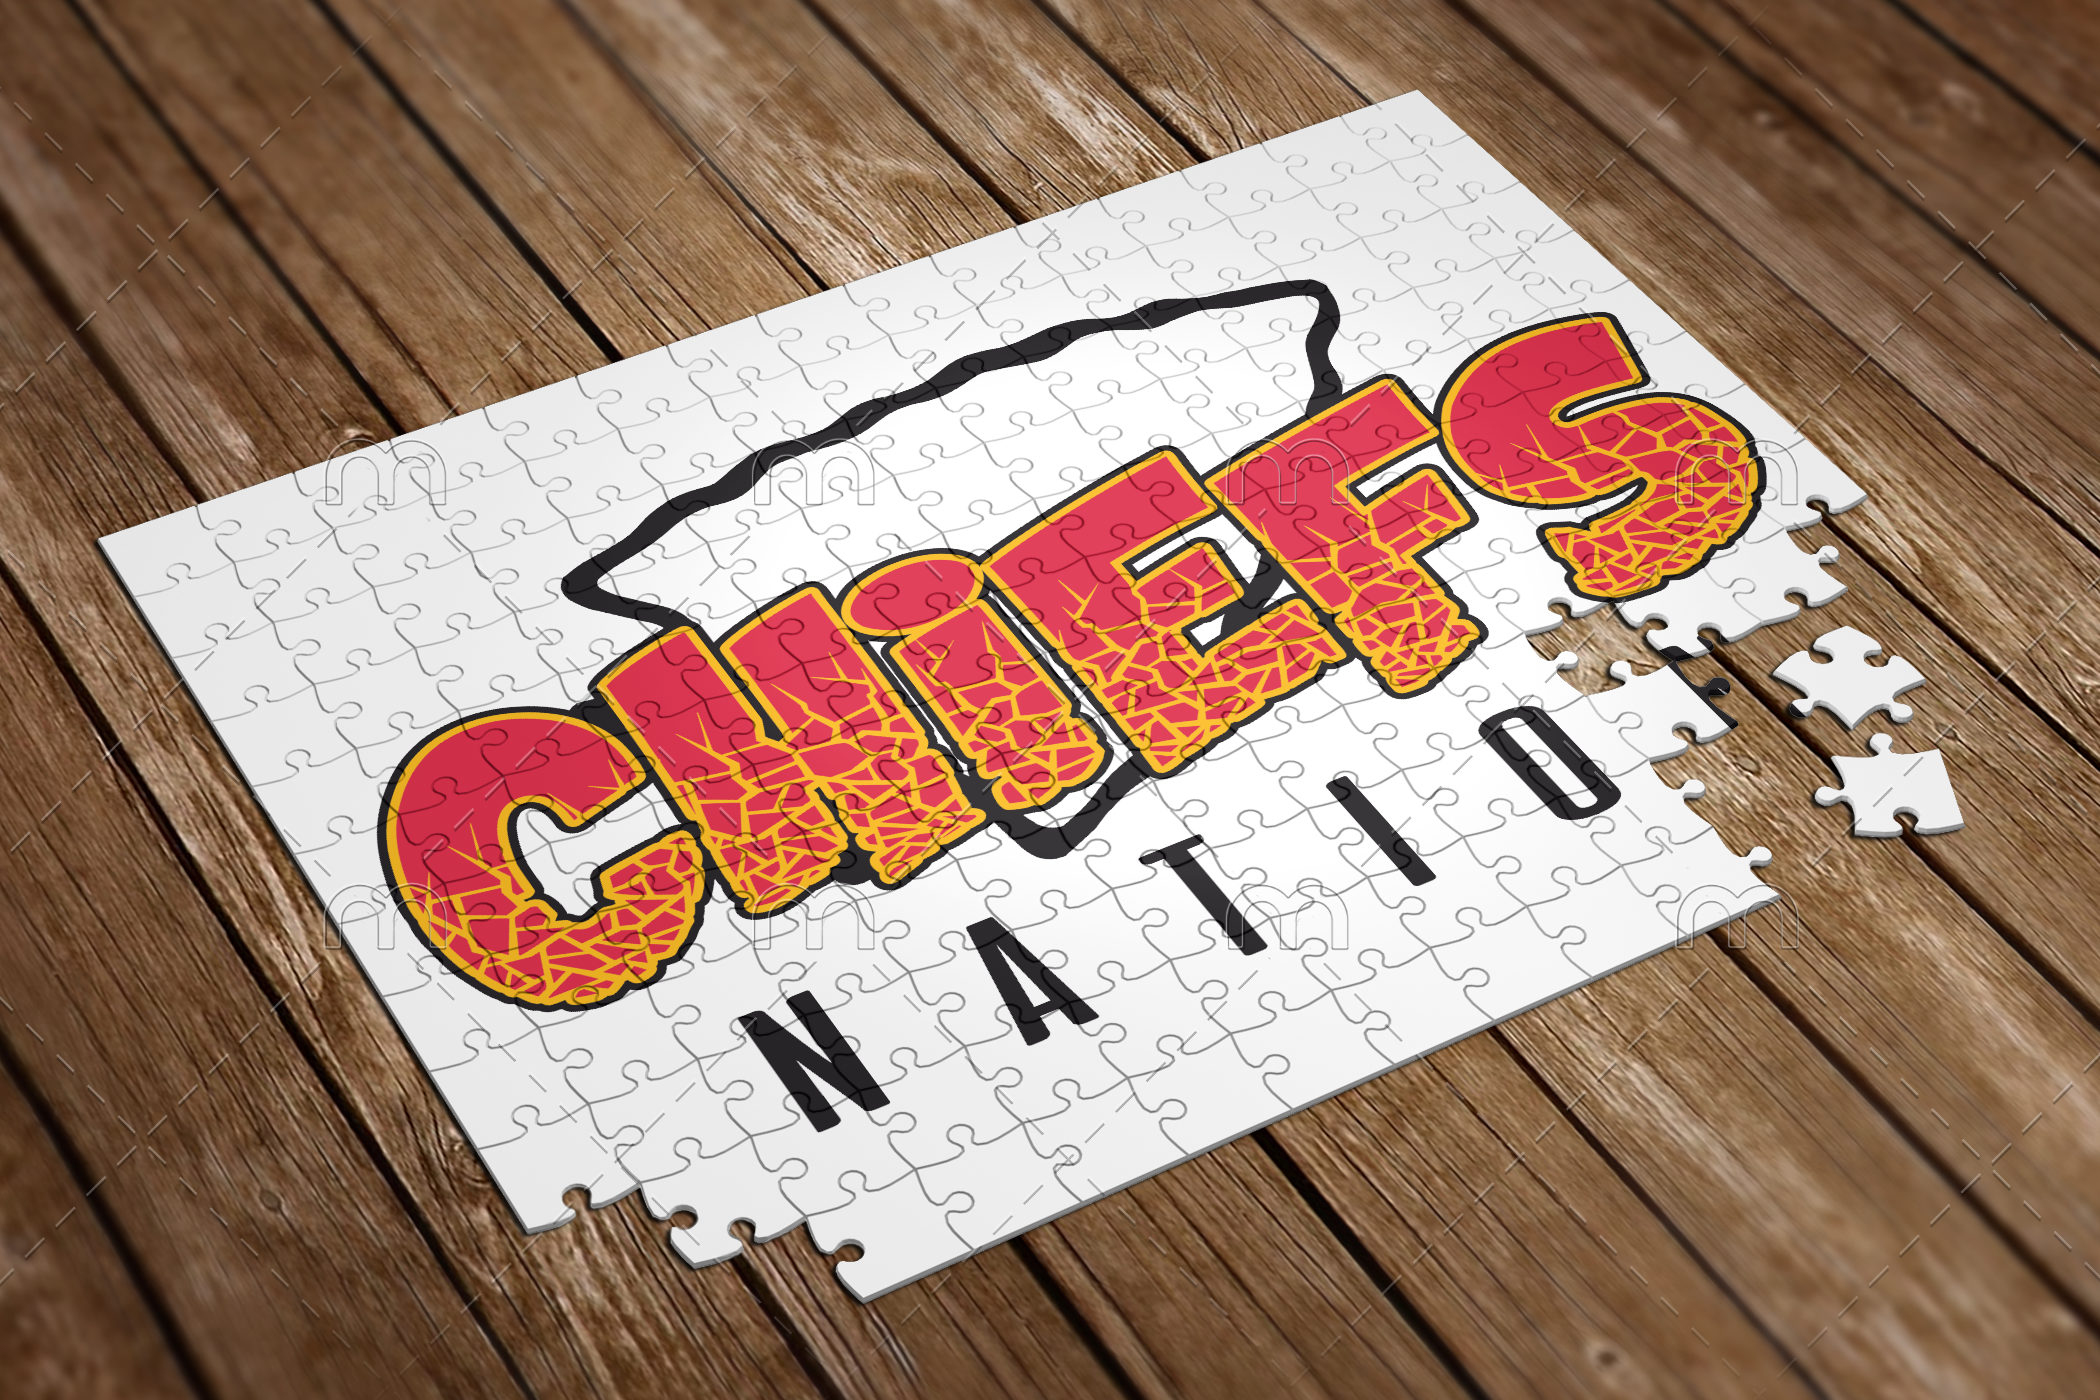 chiefs nation puzzle